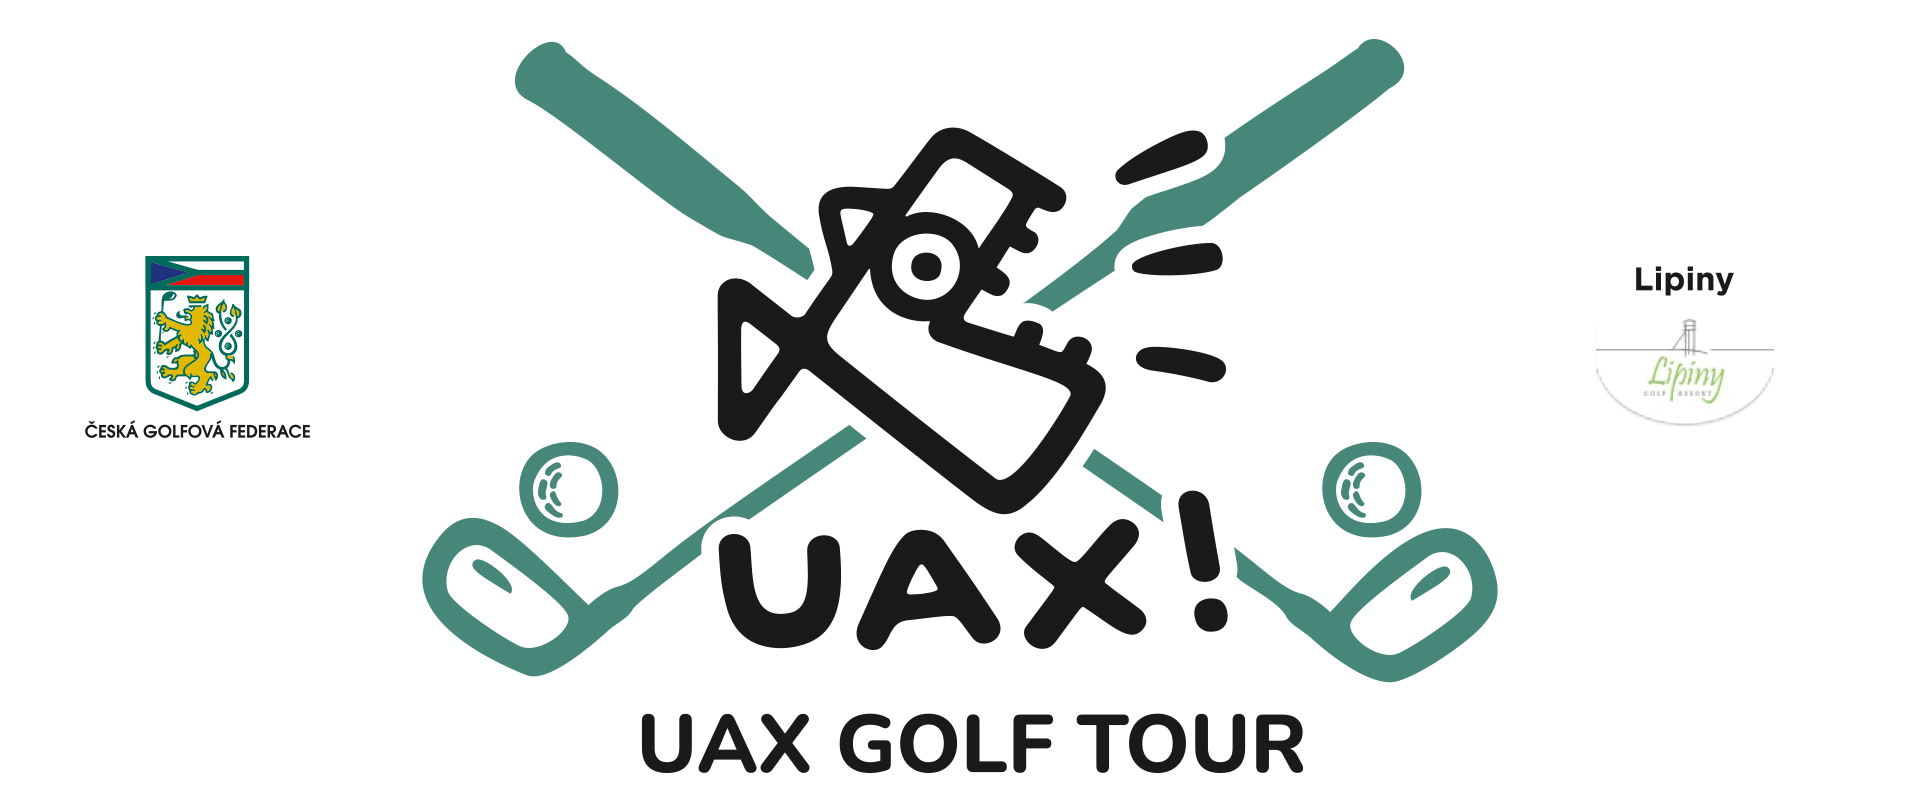 UAX Golf Tour Lipiny